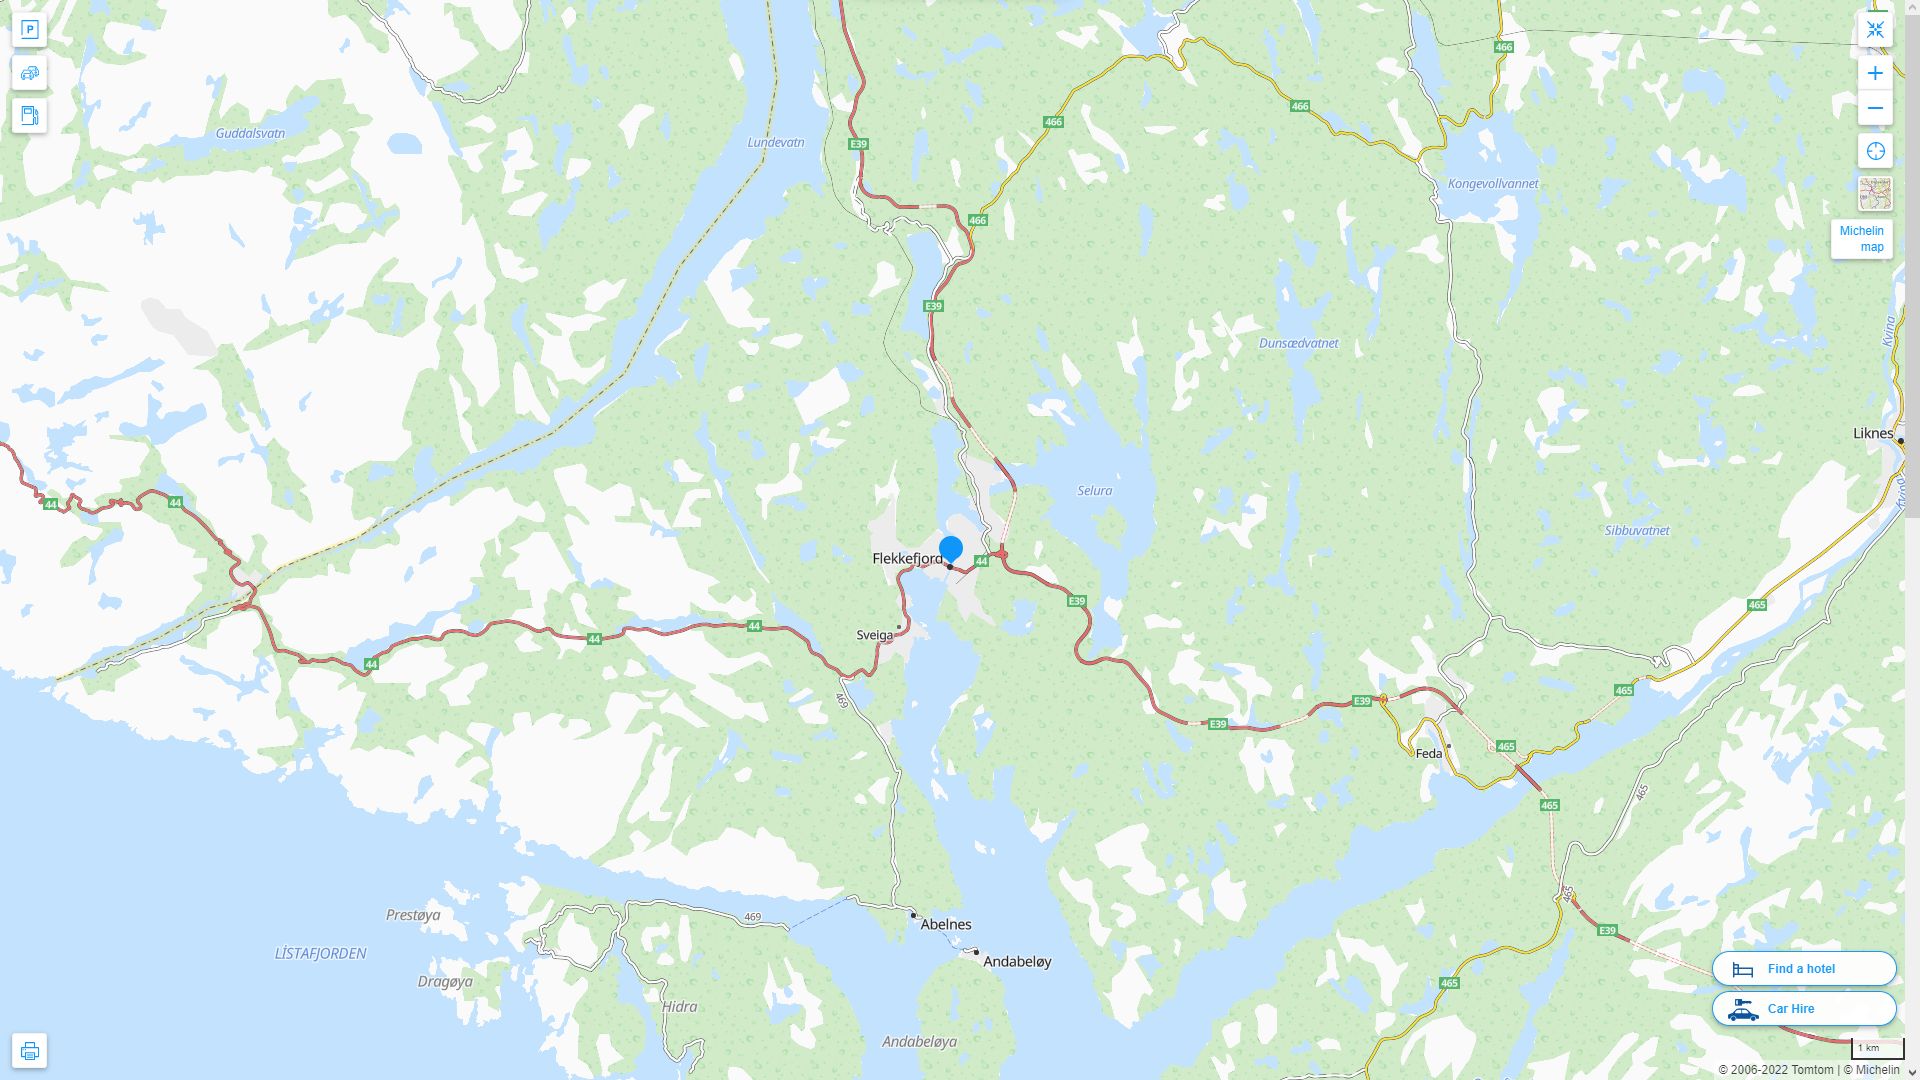 Flekkefjord Highway and Road Map